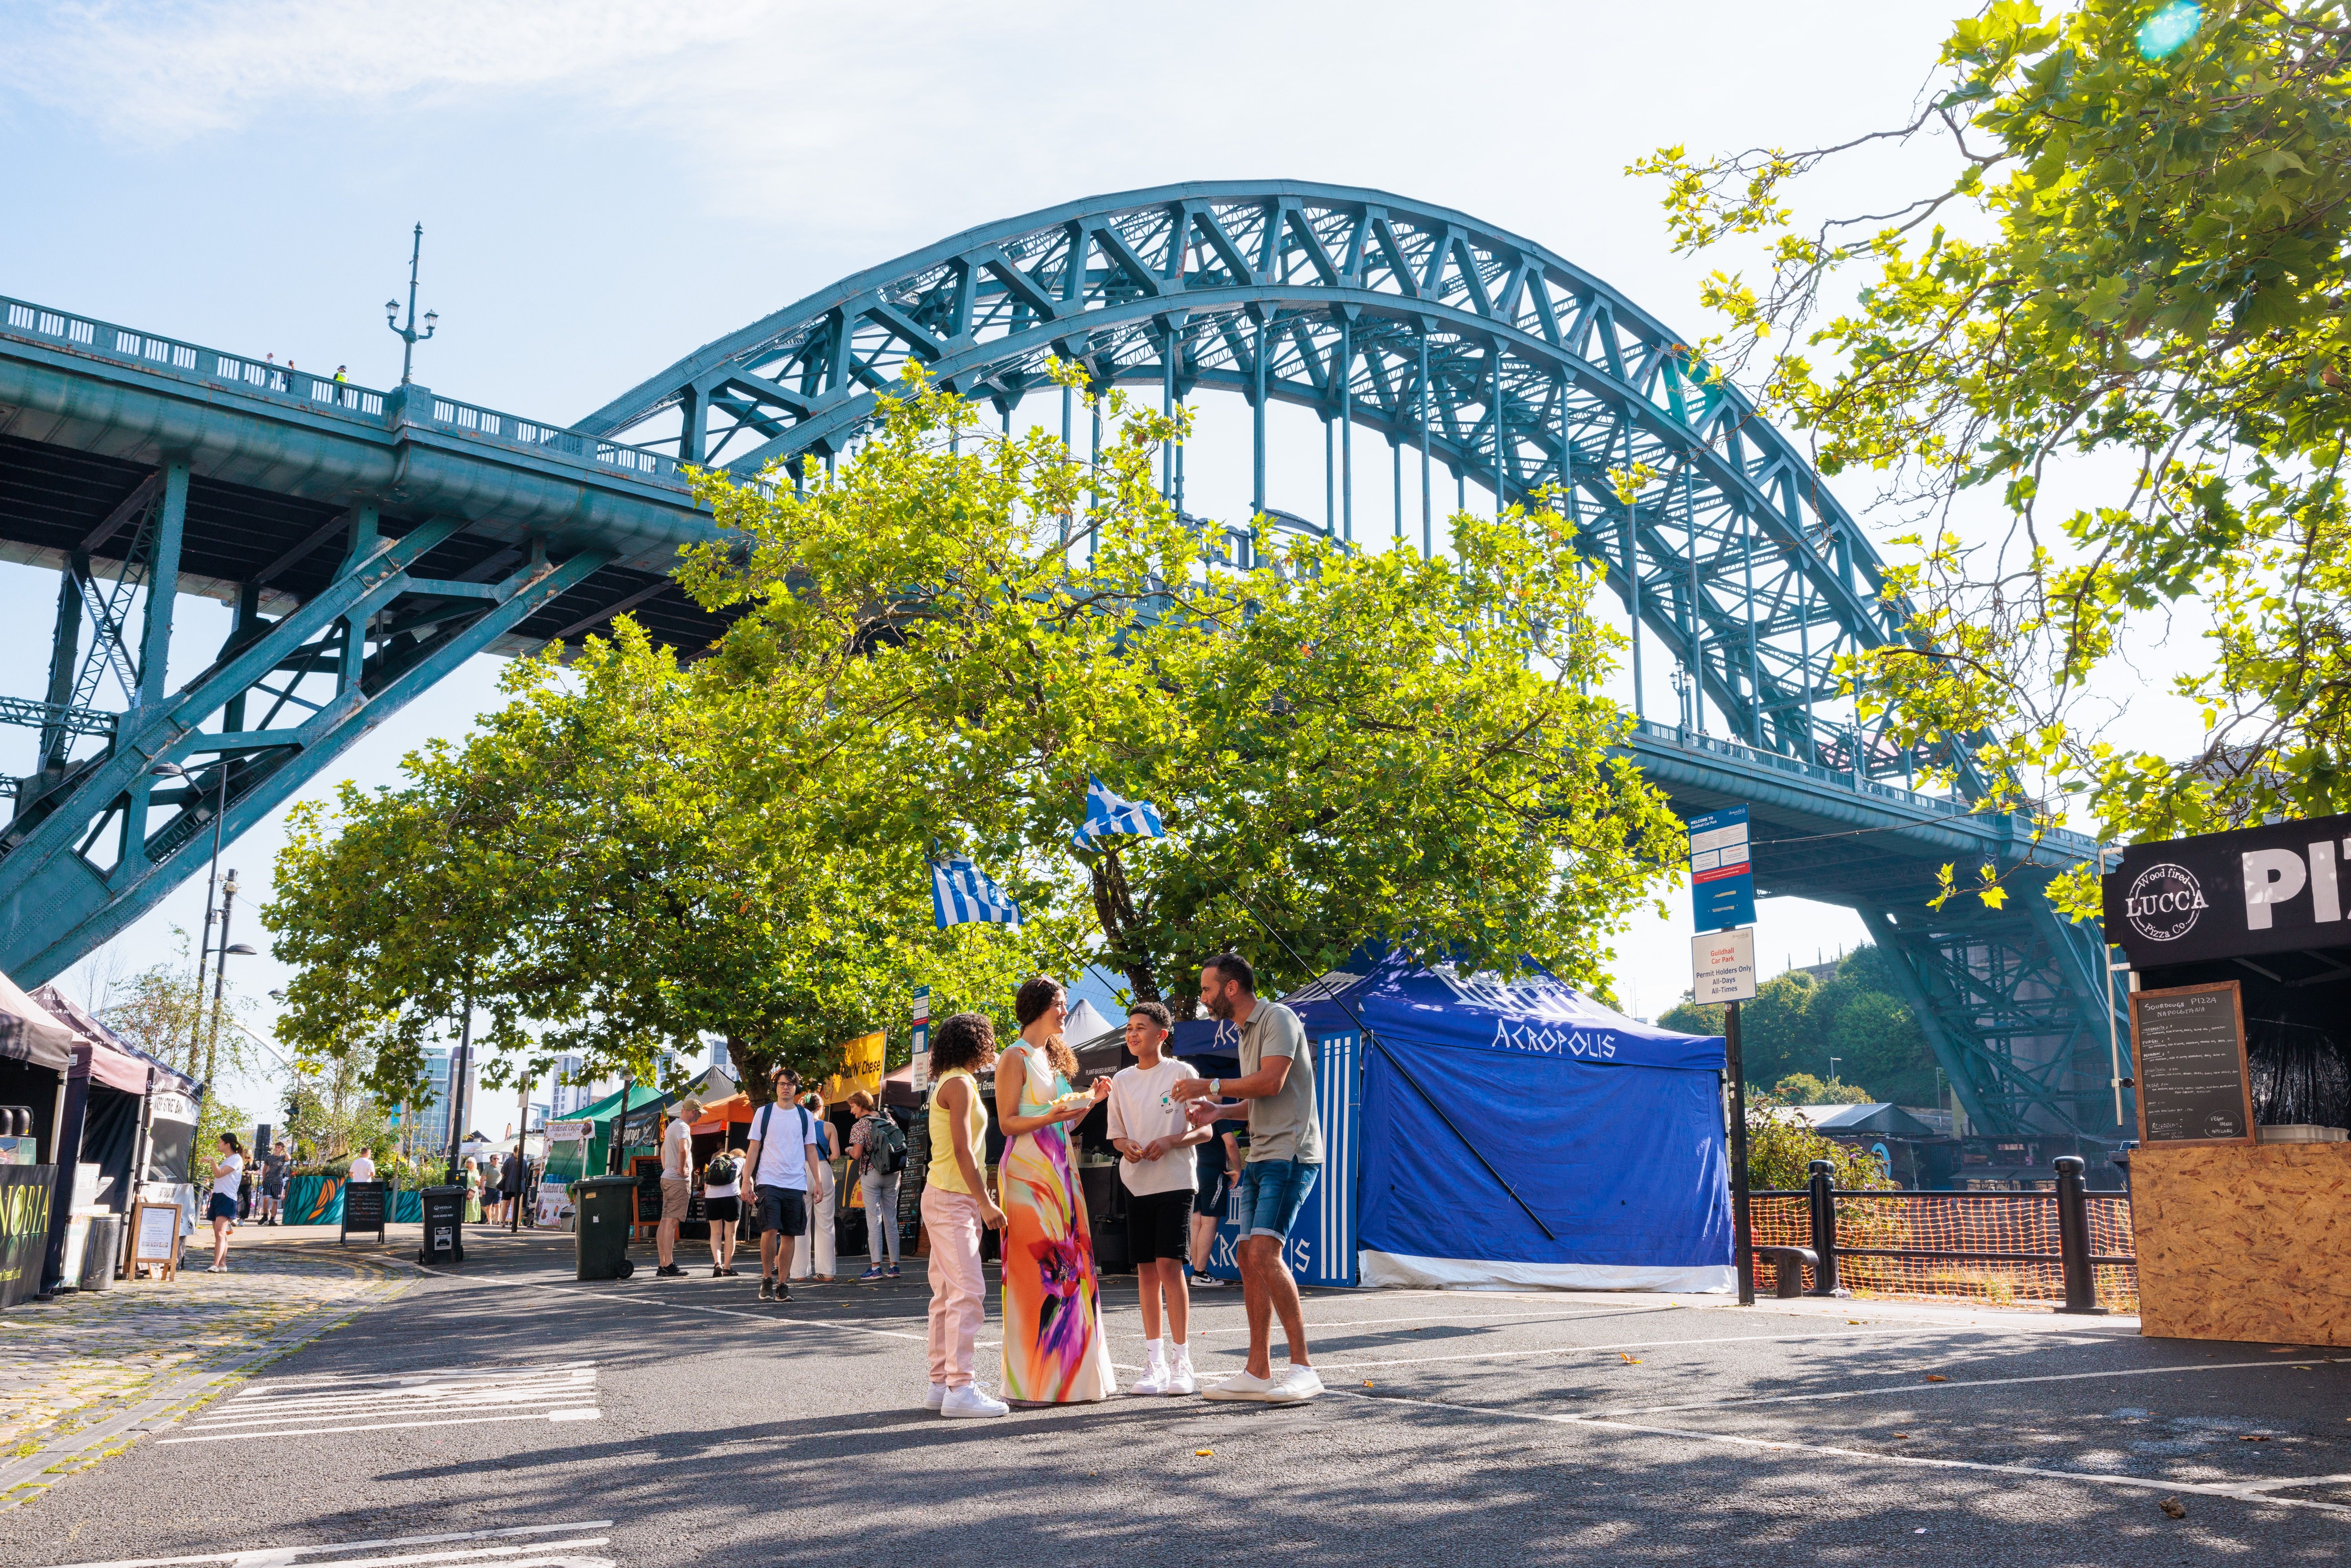 A family visit a Sunday market below the Tyne bridge, Newcastle upon Tyne